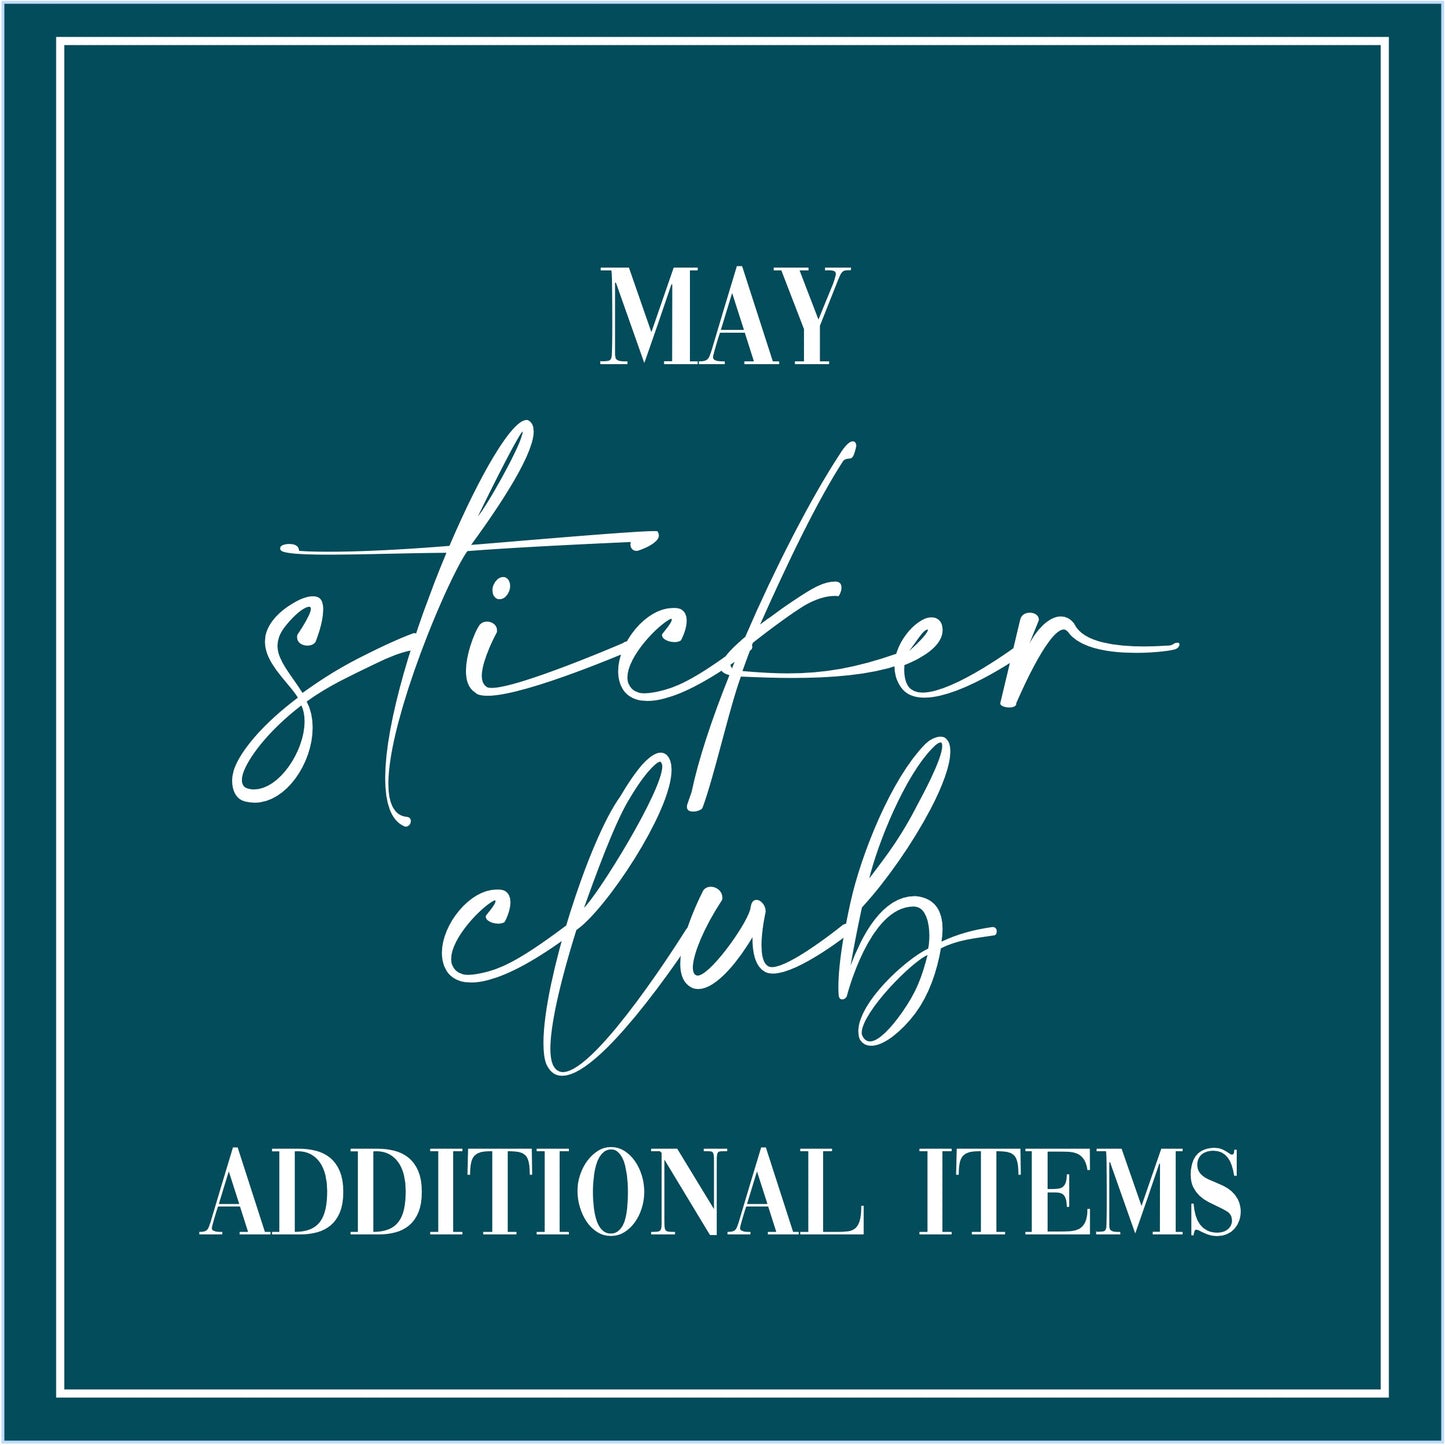 May - Sticker Club - Additional items